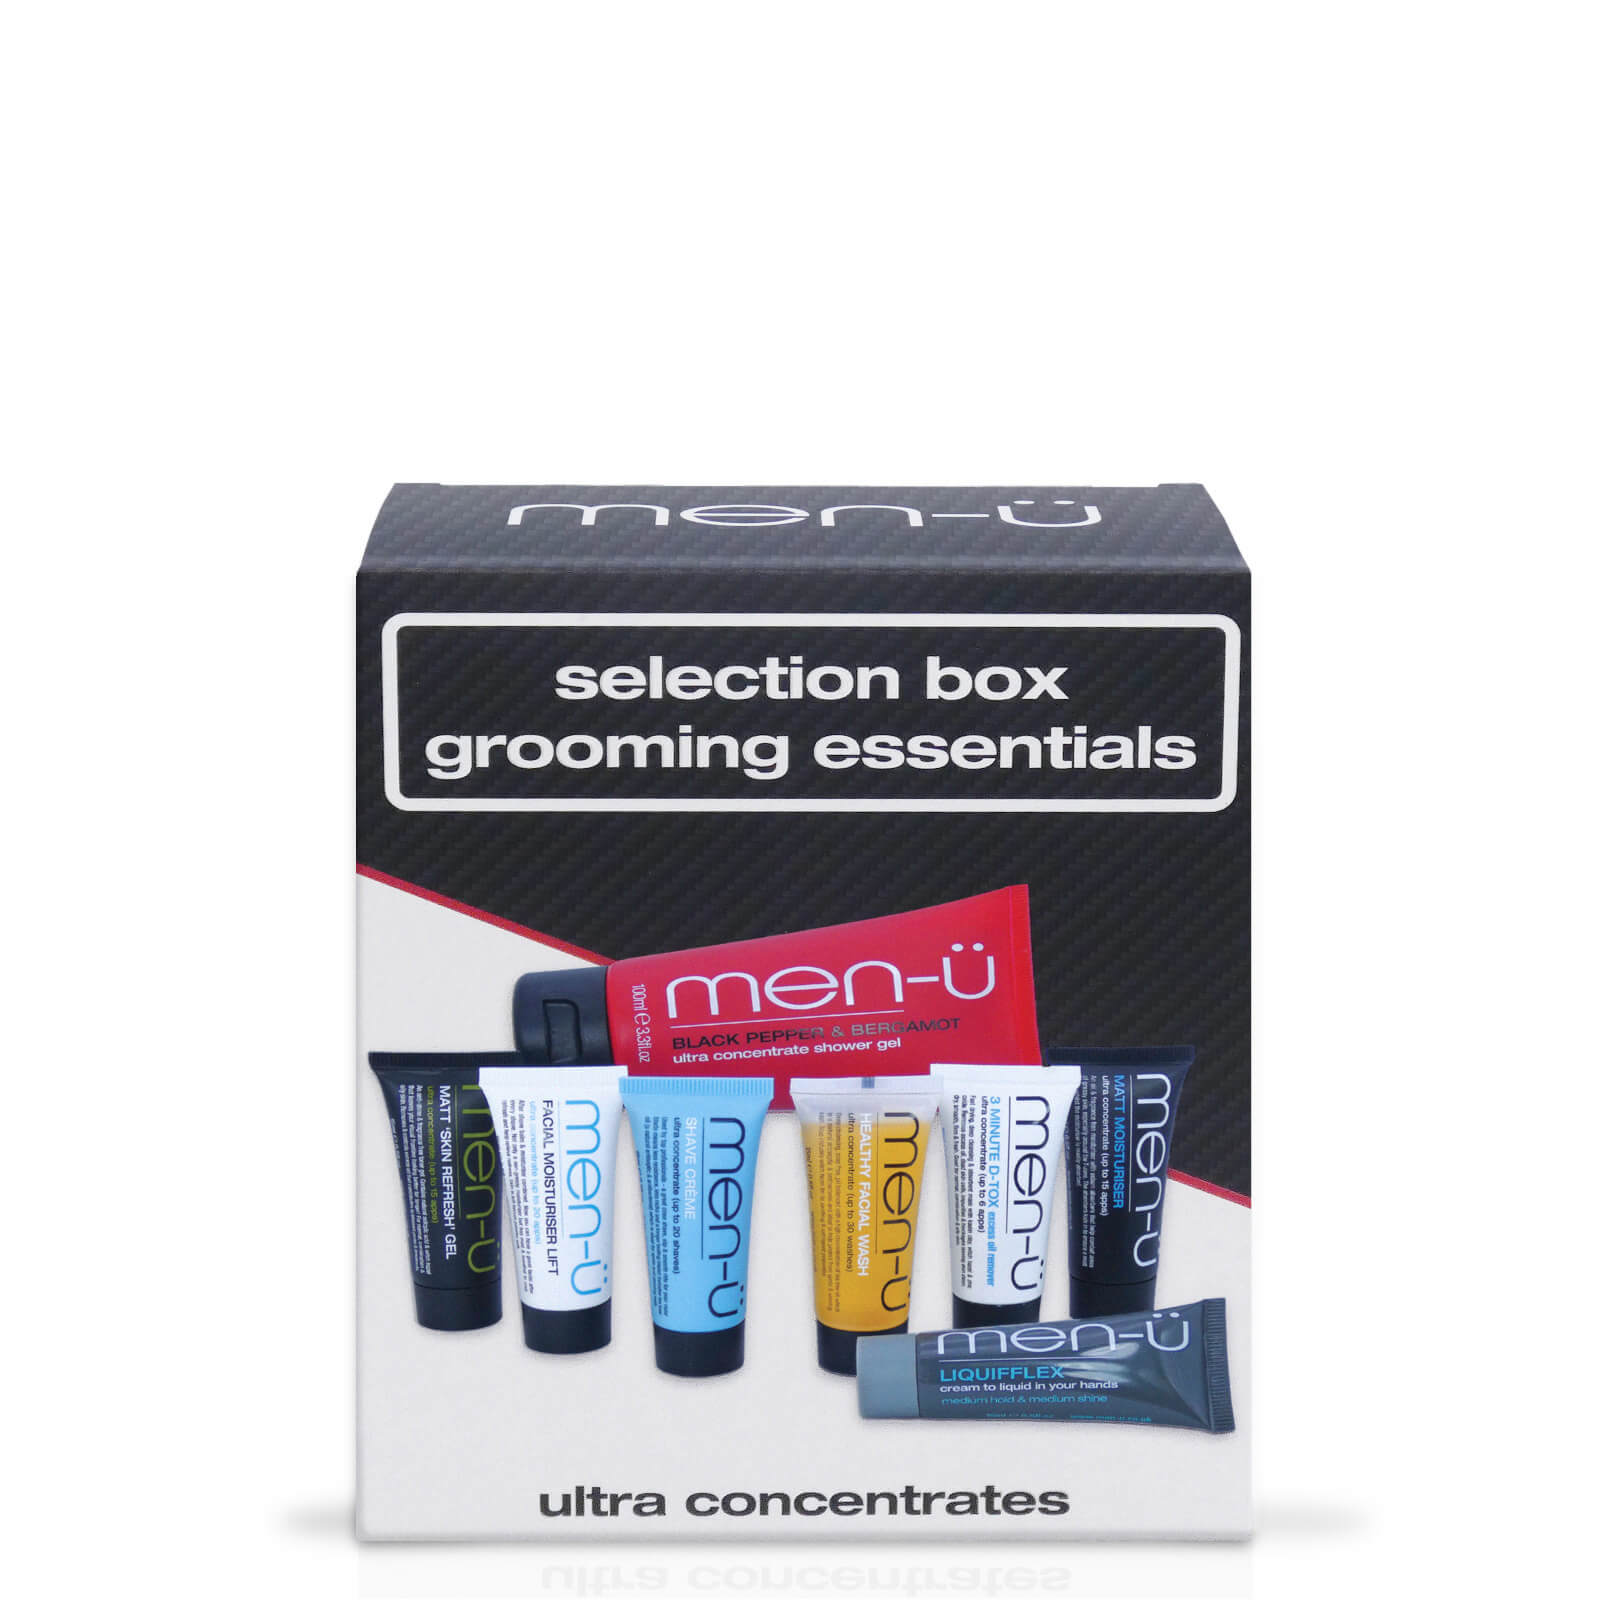 men-ü Selection Box Grooming Essentials